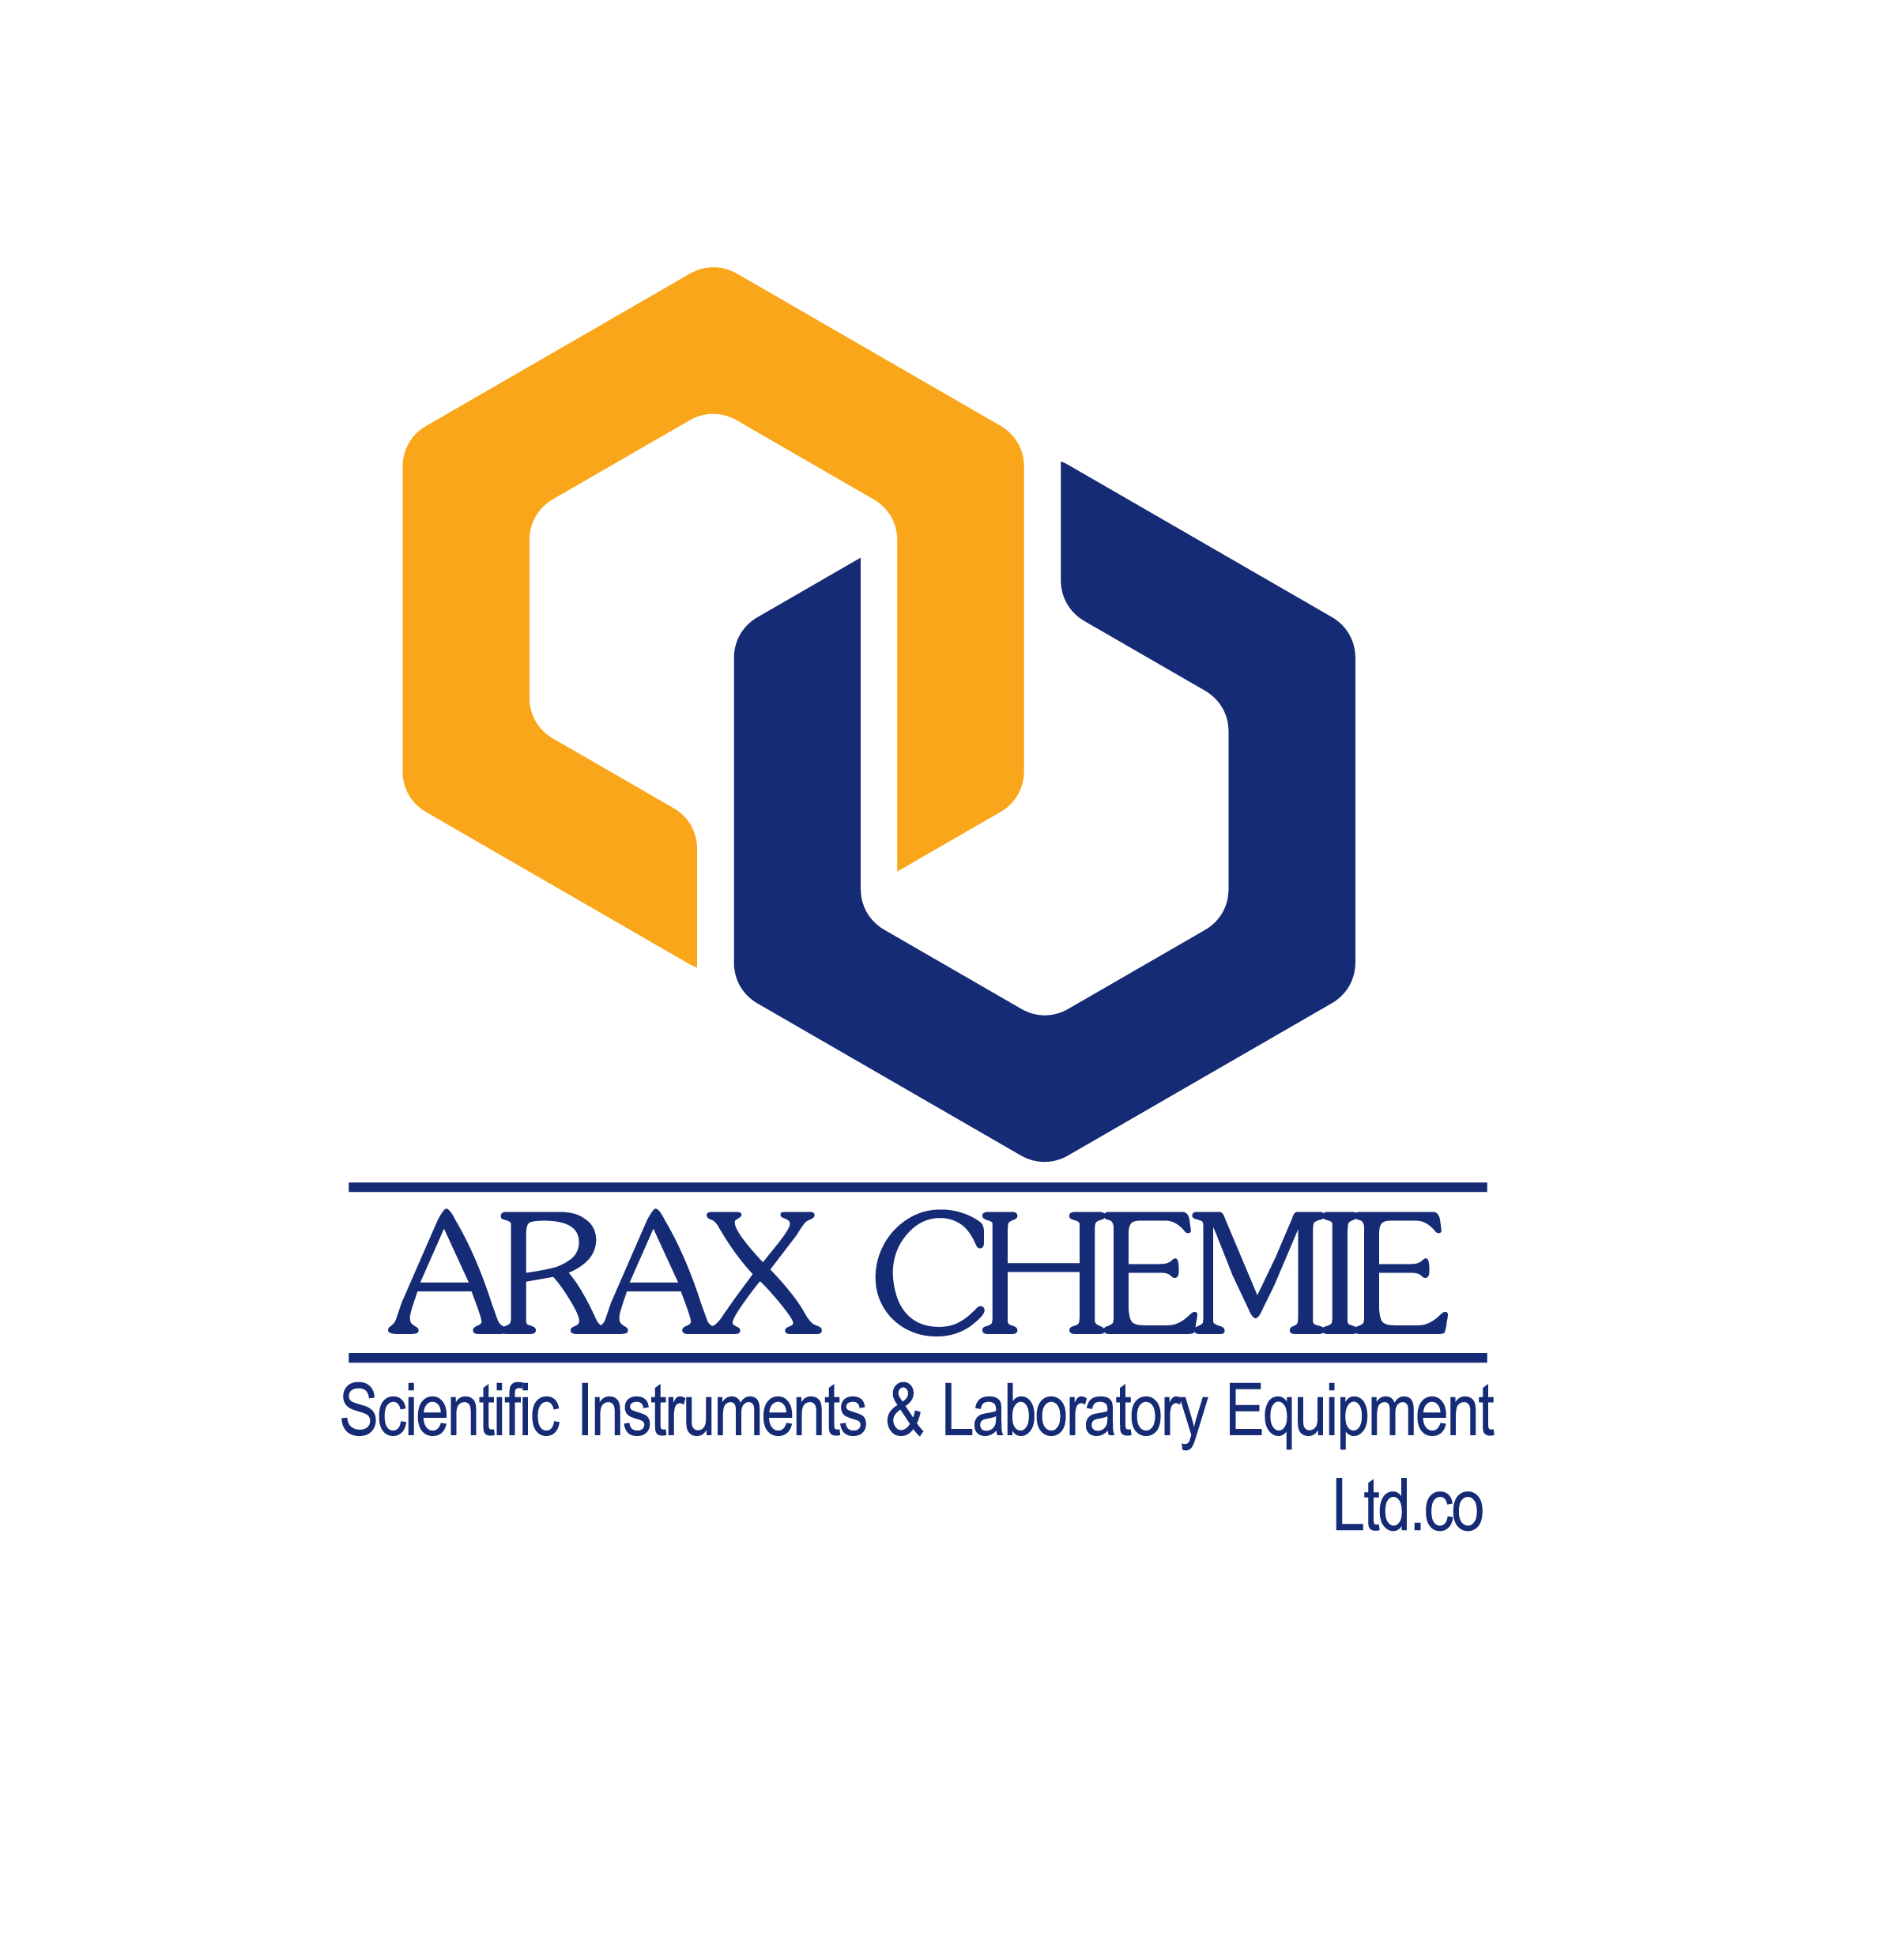 arax-chemie